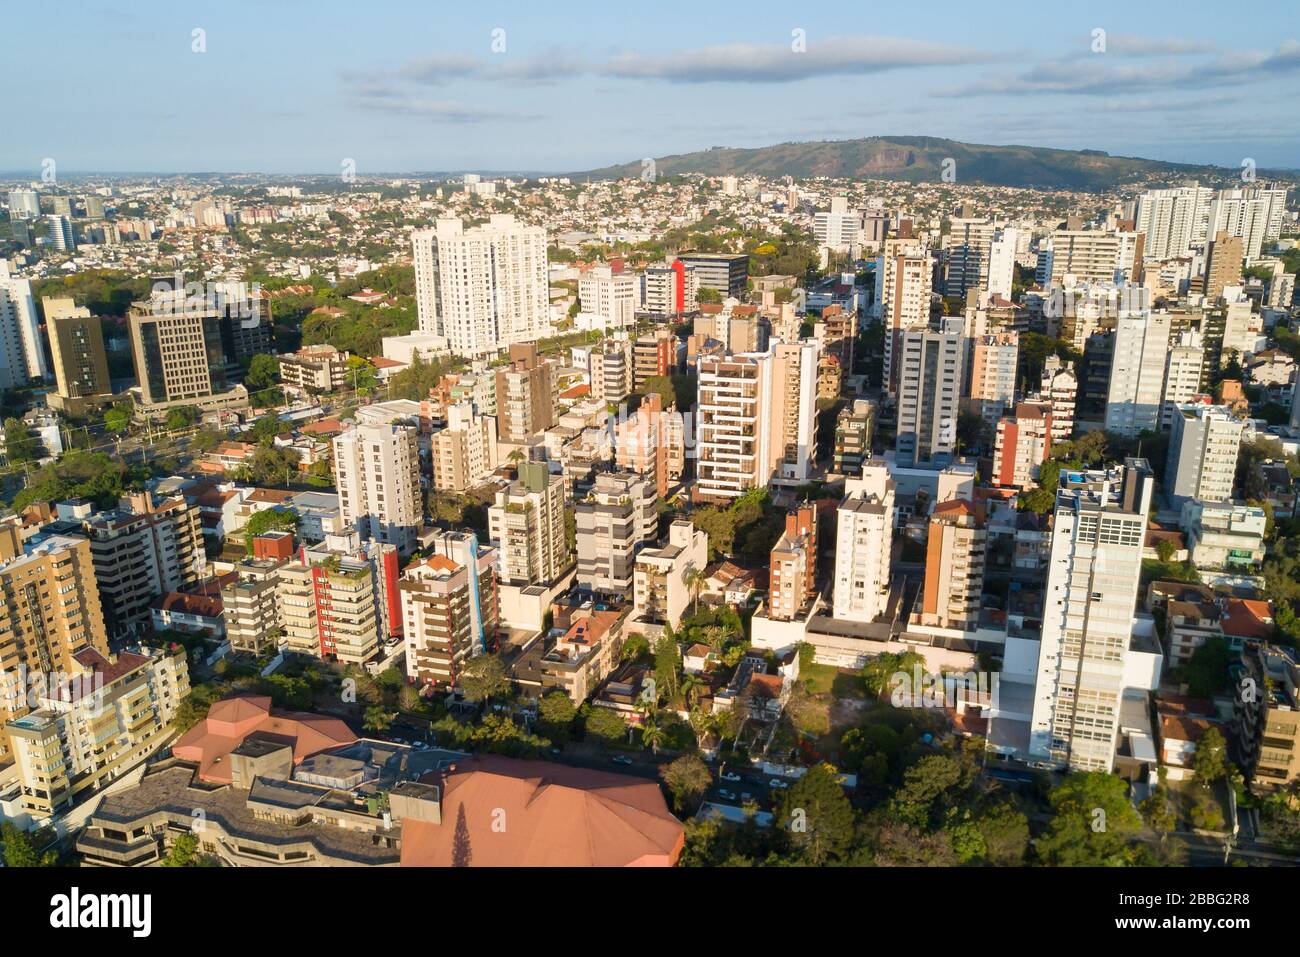 Aerial view of Porto Alegre, Rio Grande do Sul, Brazil. Petropolis neighborhood near Avenue Carlos Gomes with residential buildings. Drone photo. Stock Photo